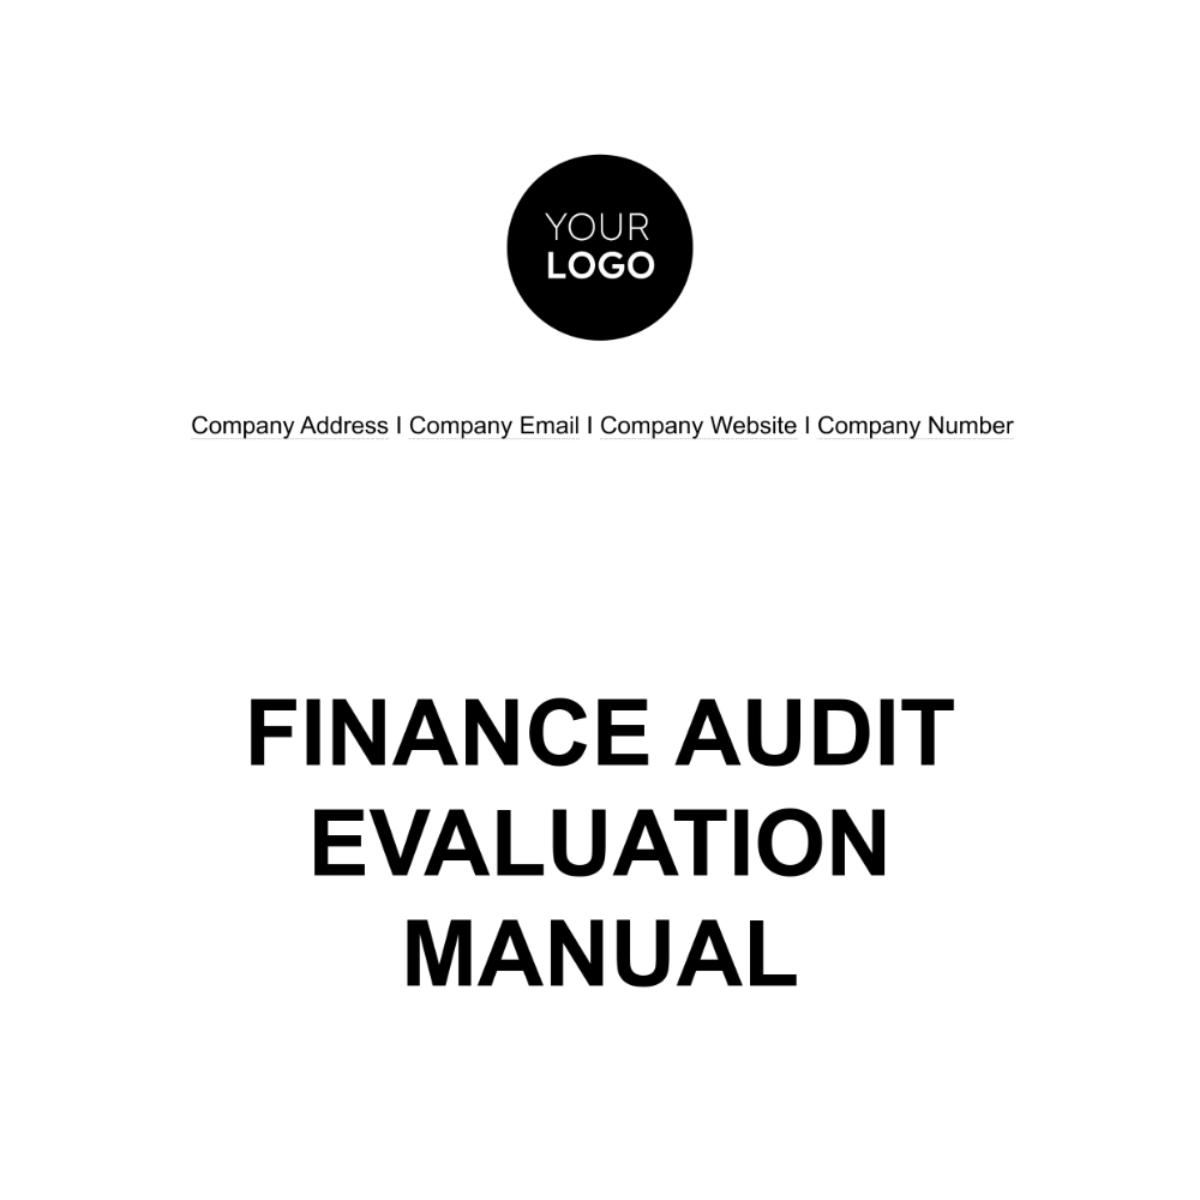 Finance Audit Evaluation Manual Template